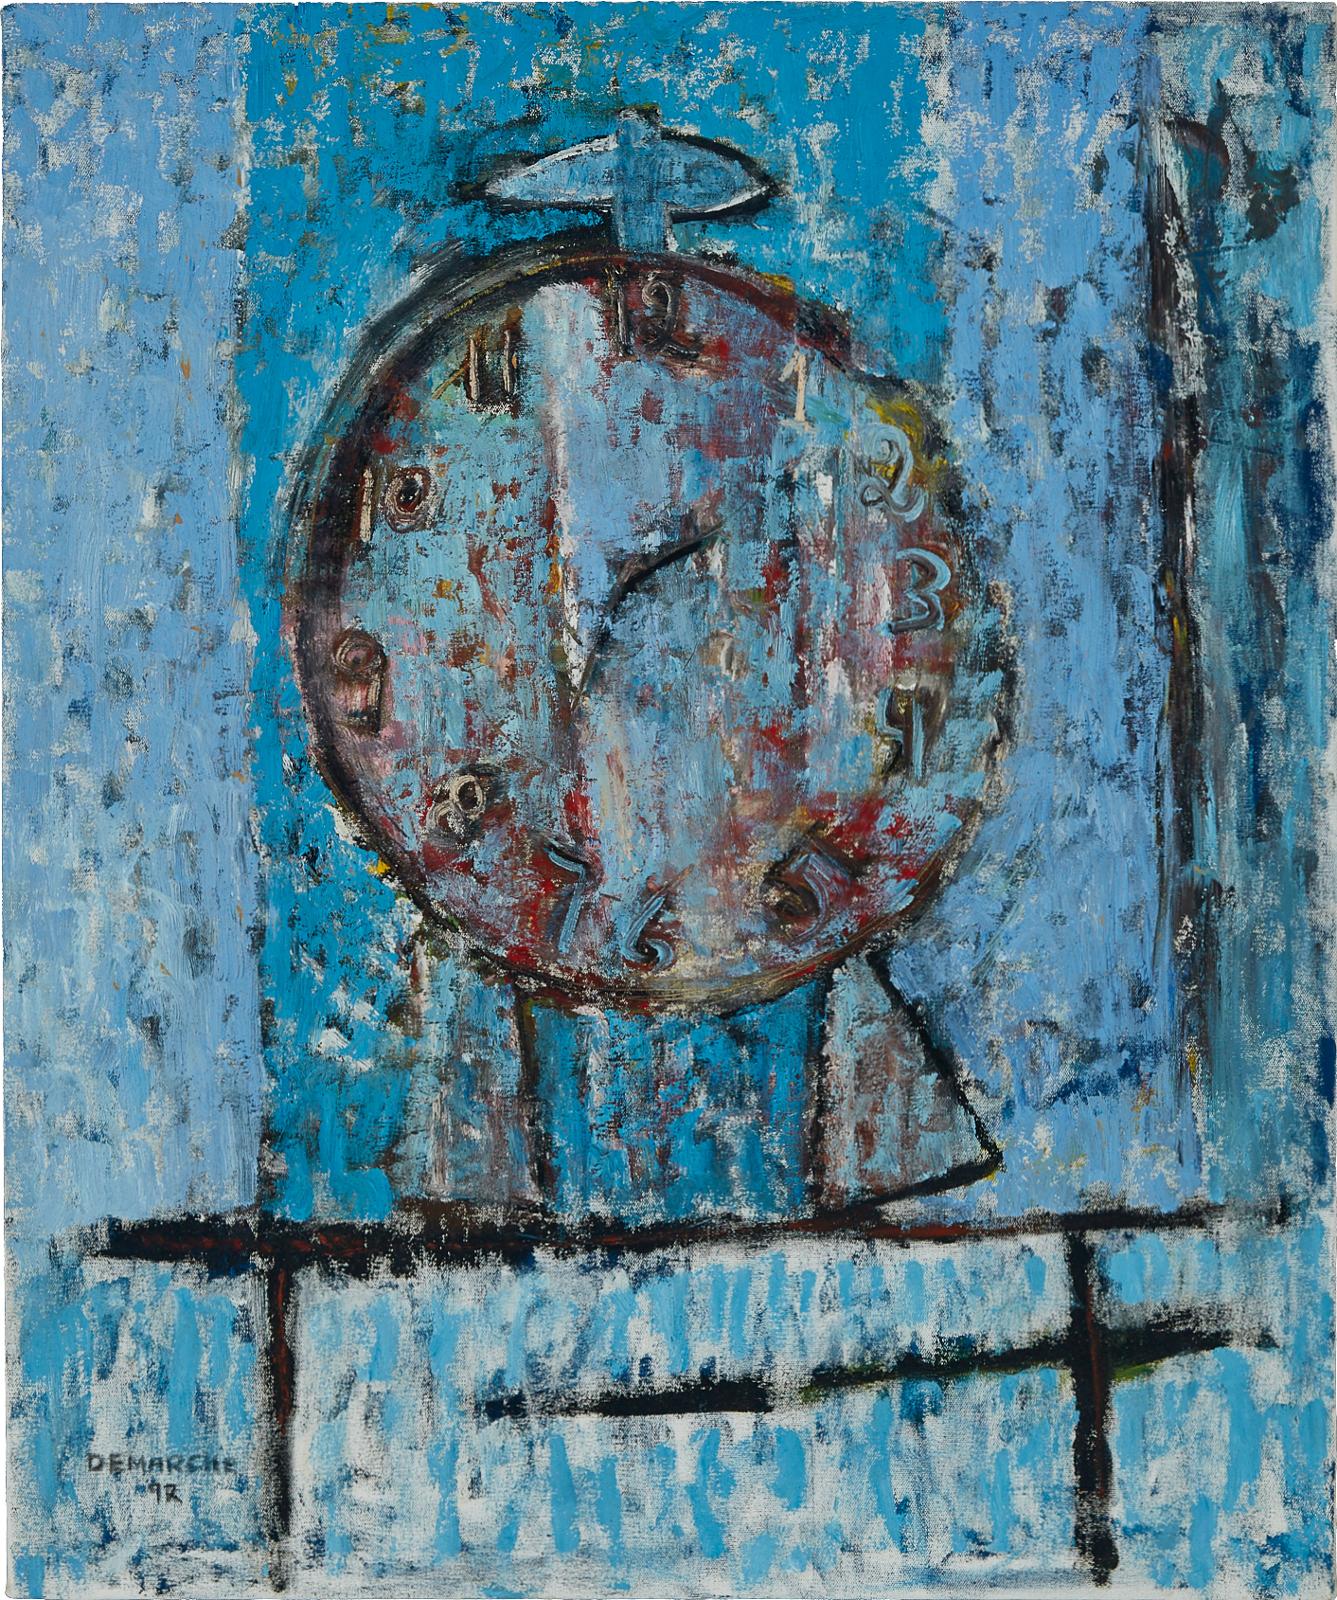 Josué Demarche (1958) - Blue Clock, 1992